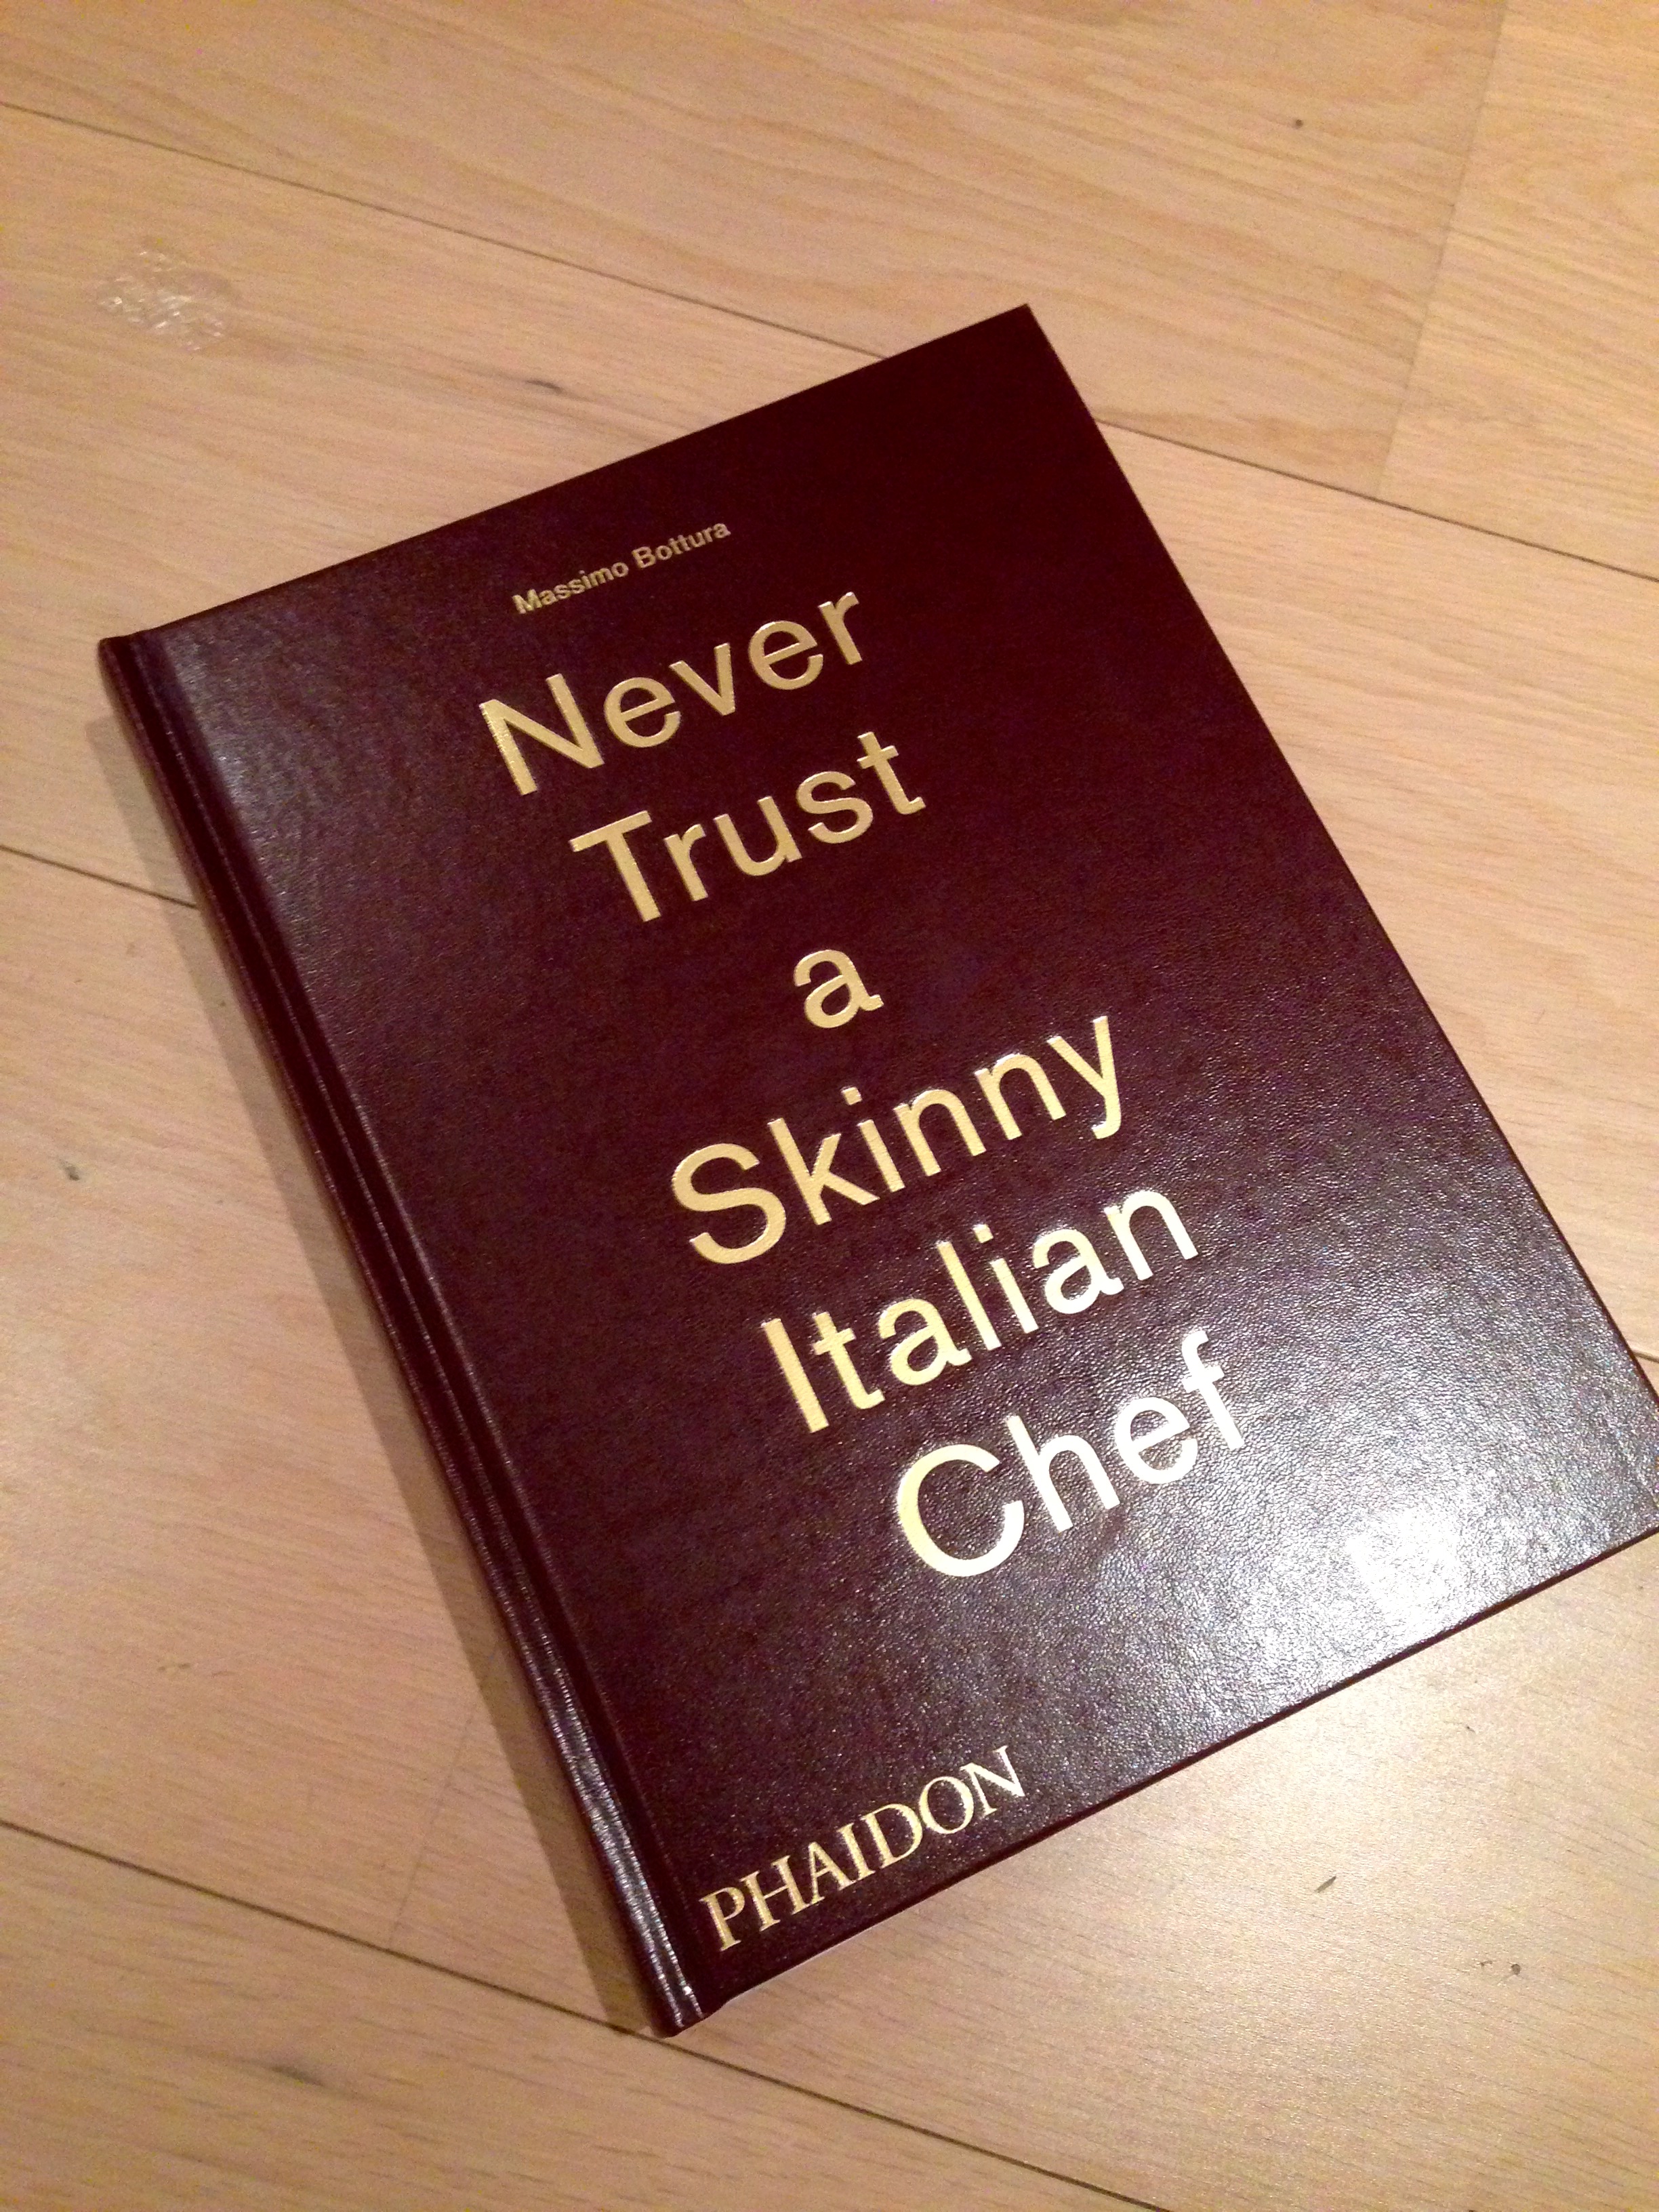 Never Trust a Skinny Italian Chef